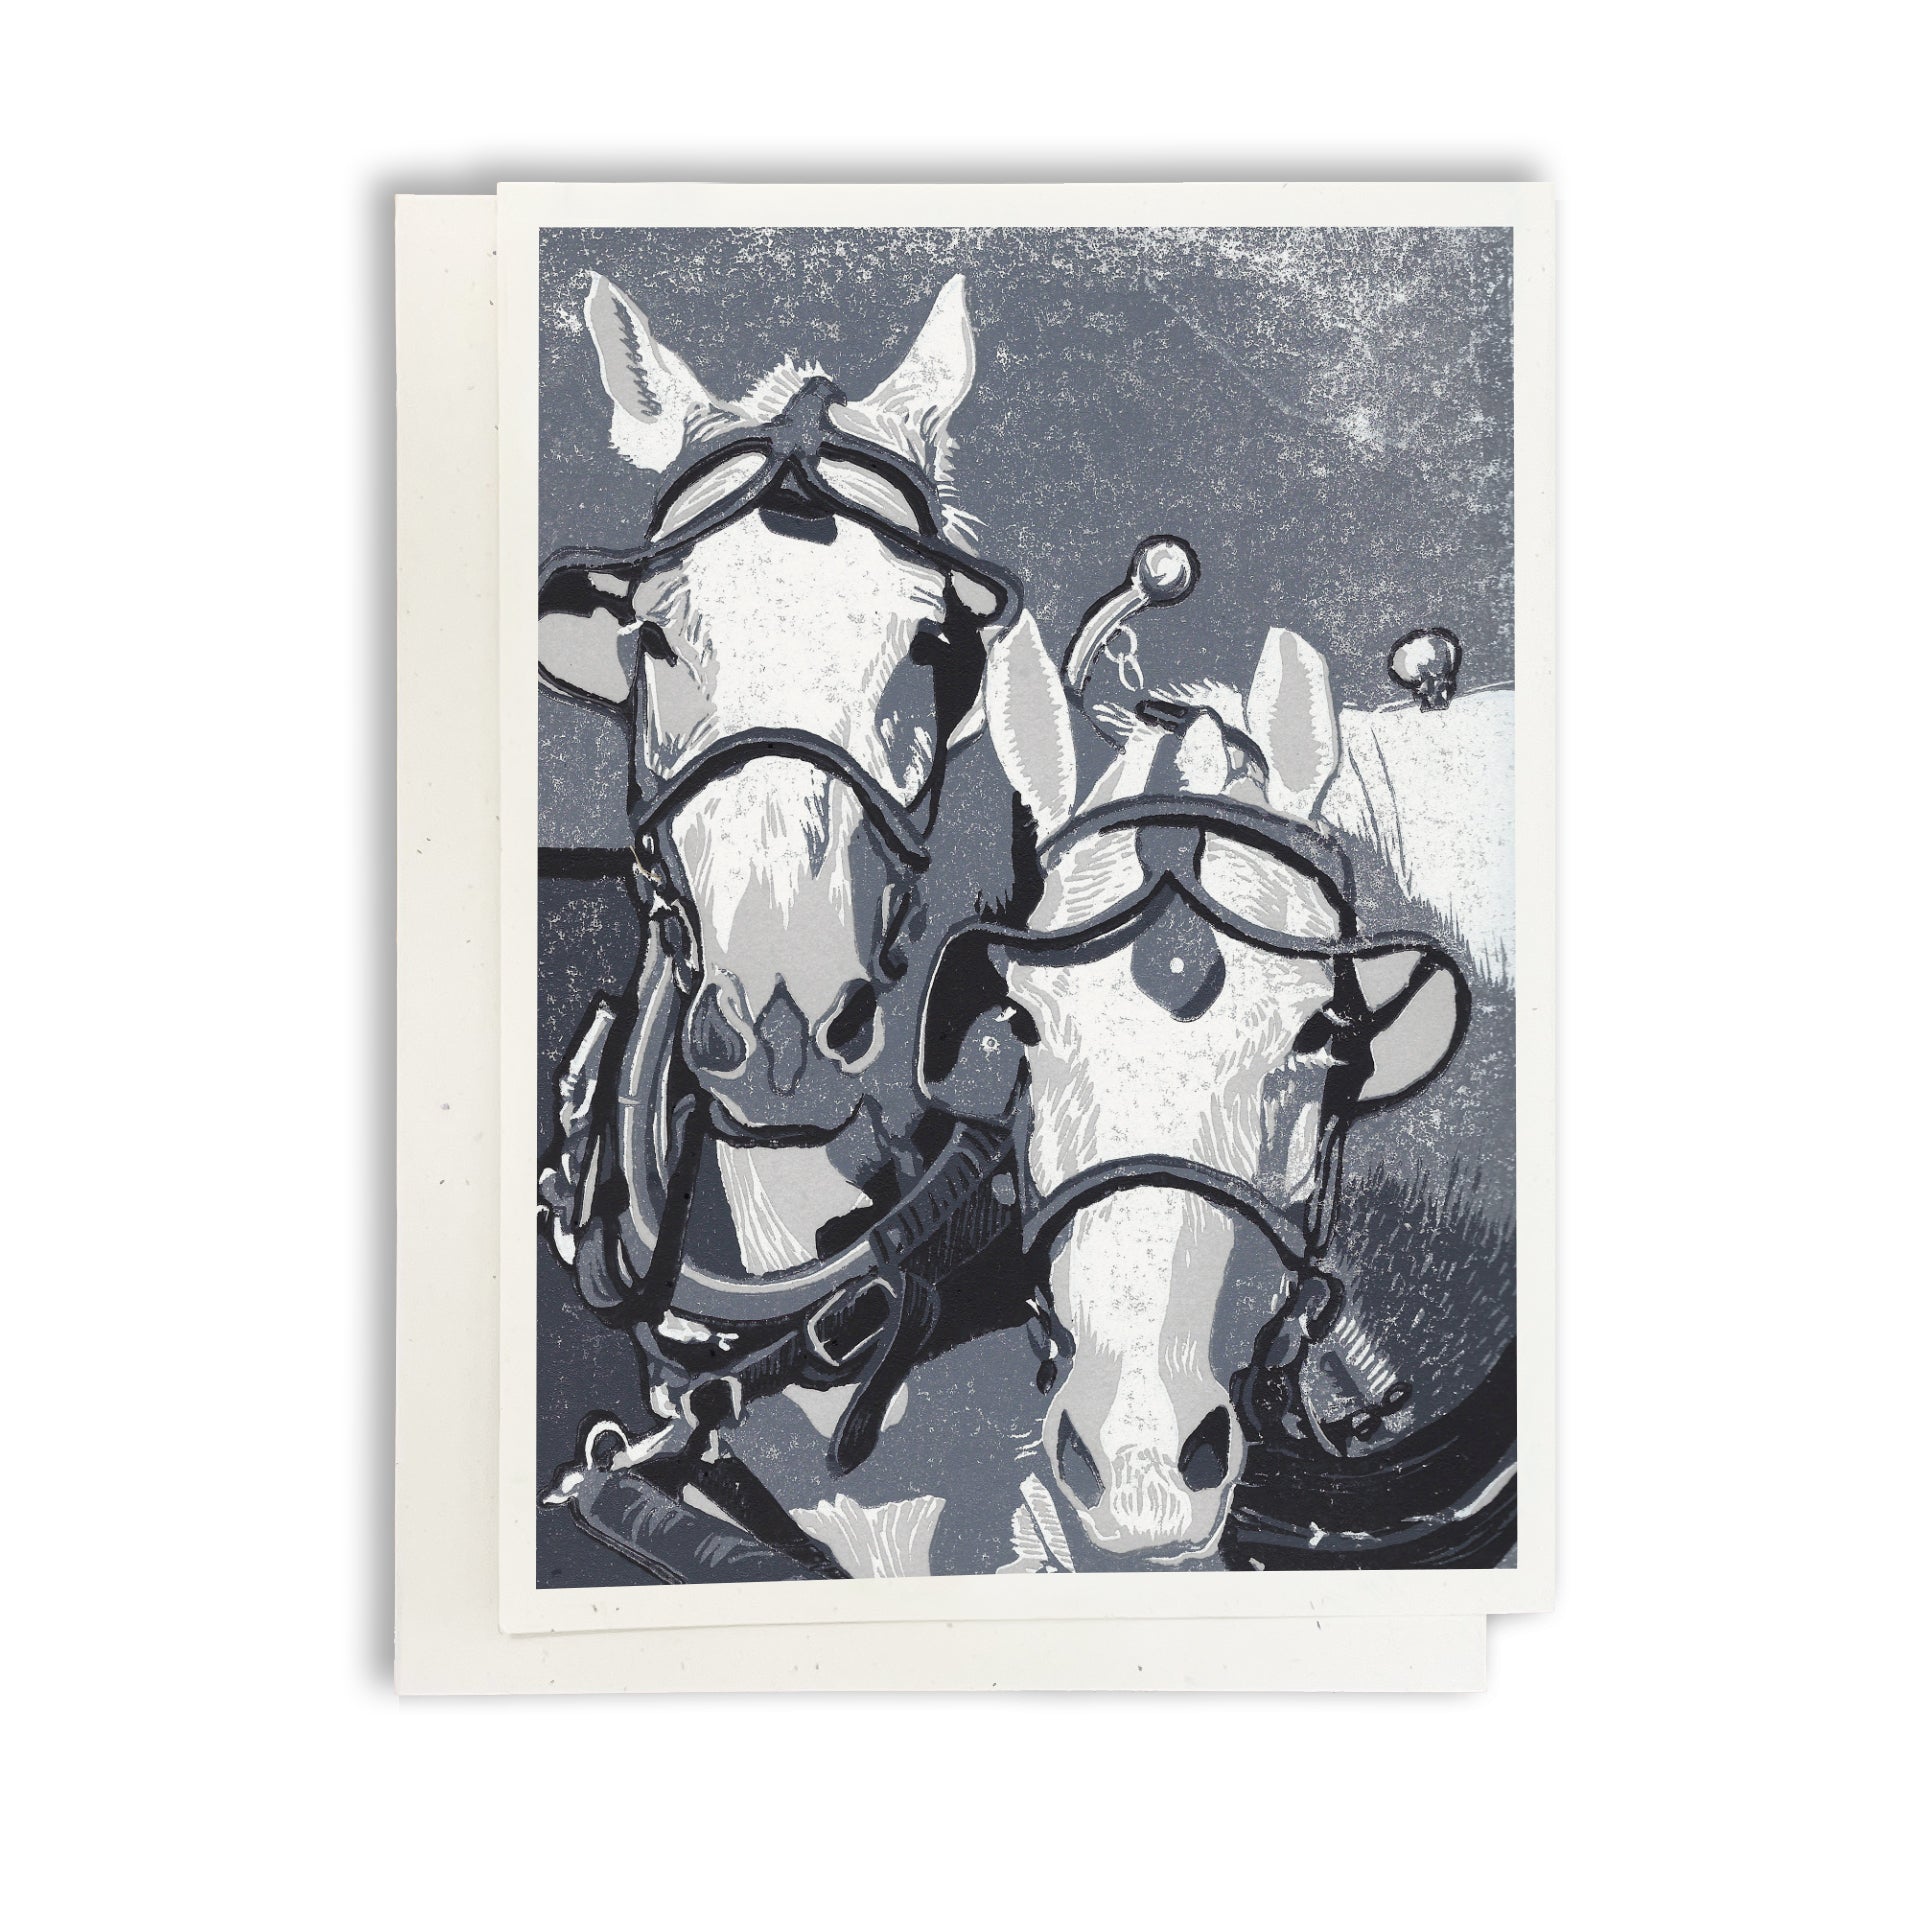 Two Horse Team greeting card by Natalia Wohletz, Peninsula Prints.